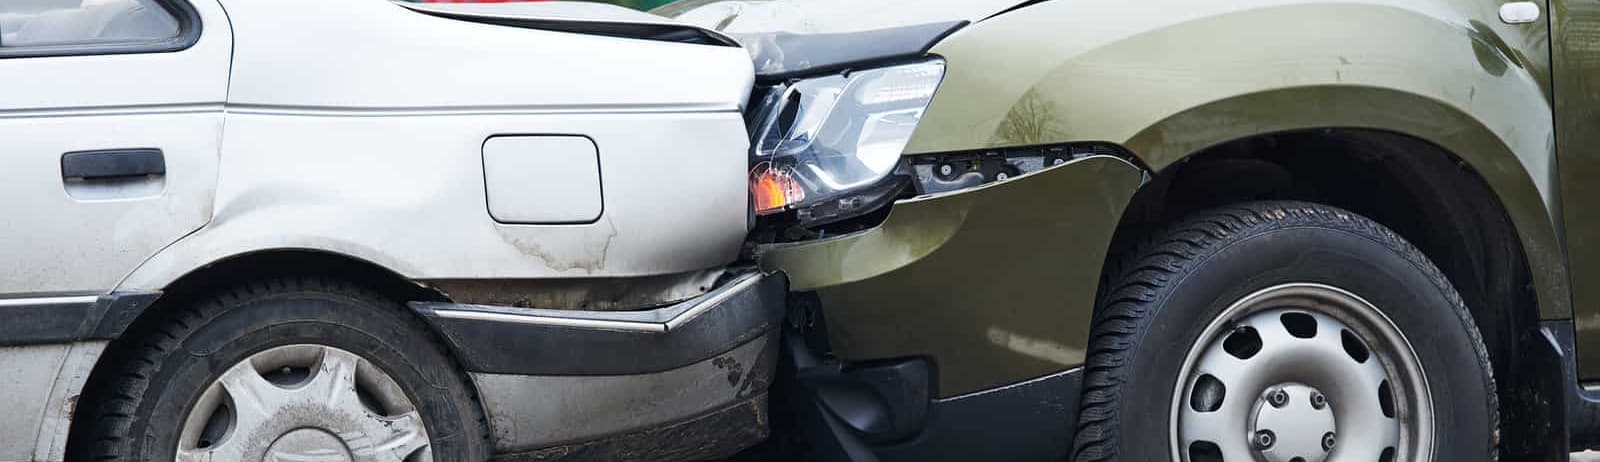 Auto Insurance Claims Process